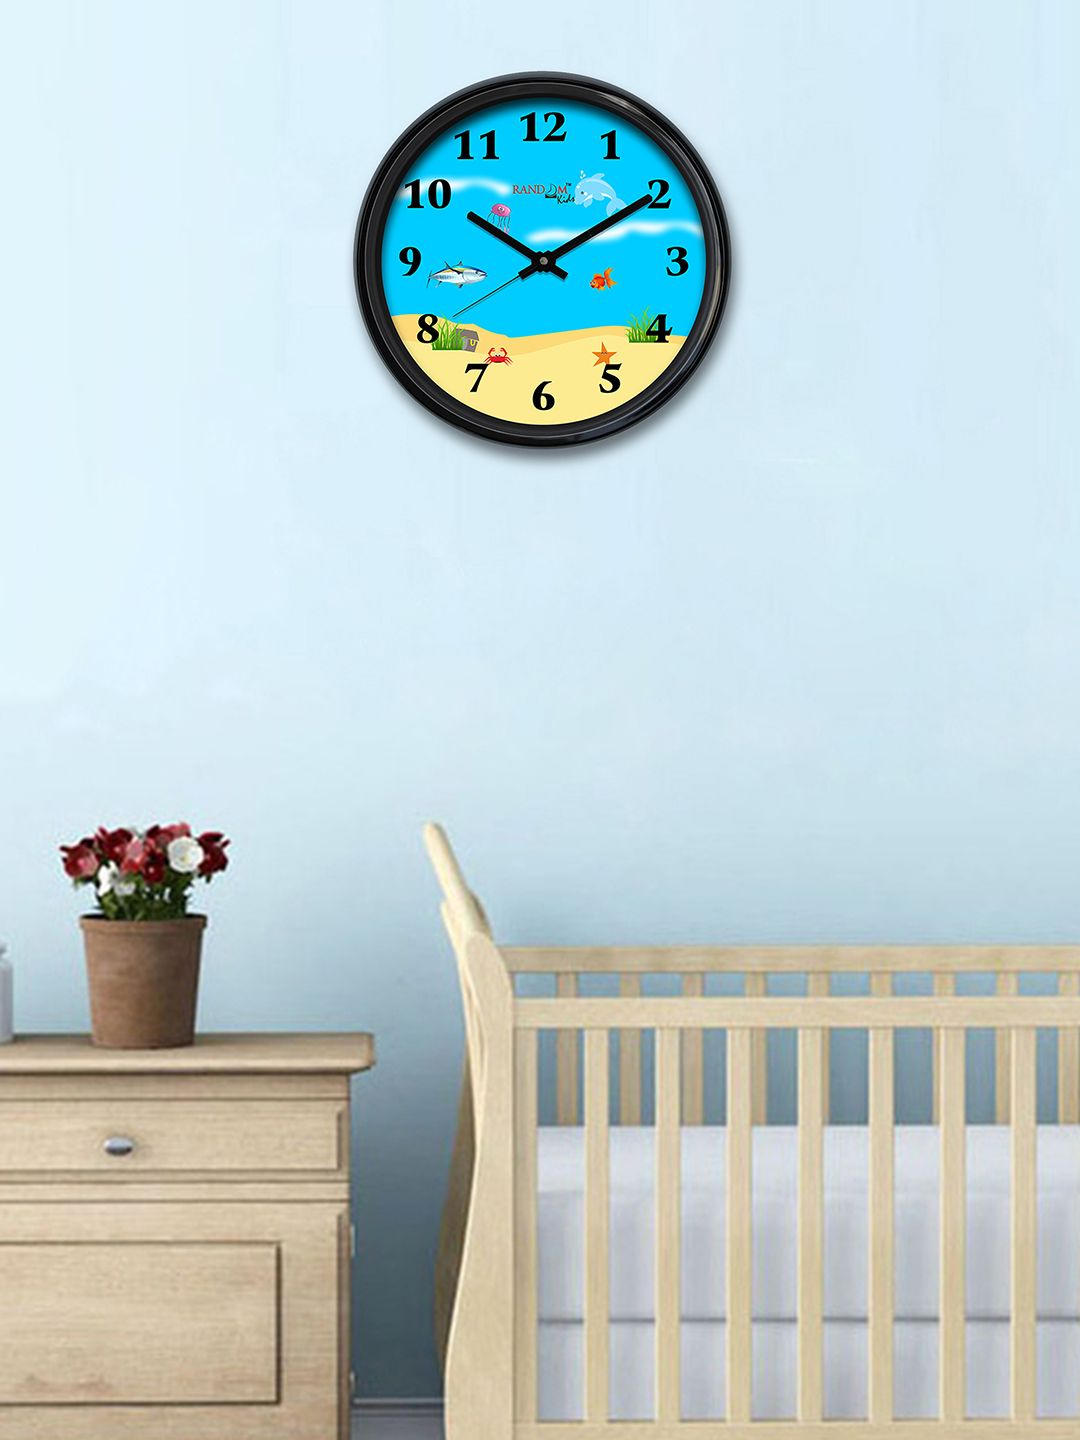 RANDOM Blue Round Printed Analogue Wall Clock 30.4 cm x 30.4 cm x 5.08 cm Price in India